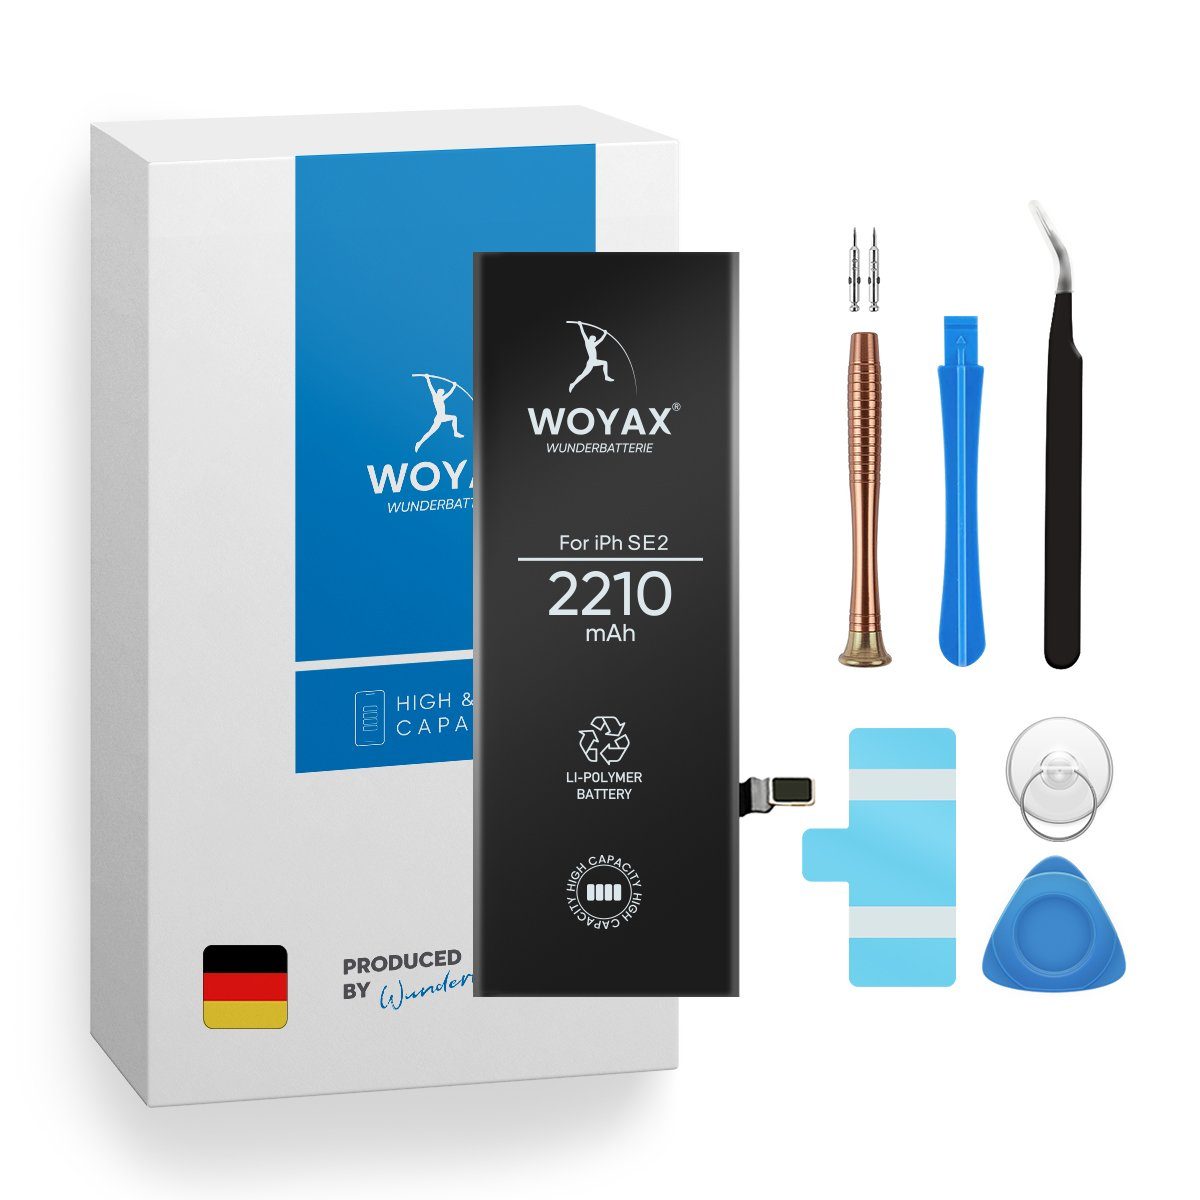 Wunderbatterie 2210mAh SE 2020 Hohe Handy-Akku / Akku Kapazität für Woyax iPhone